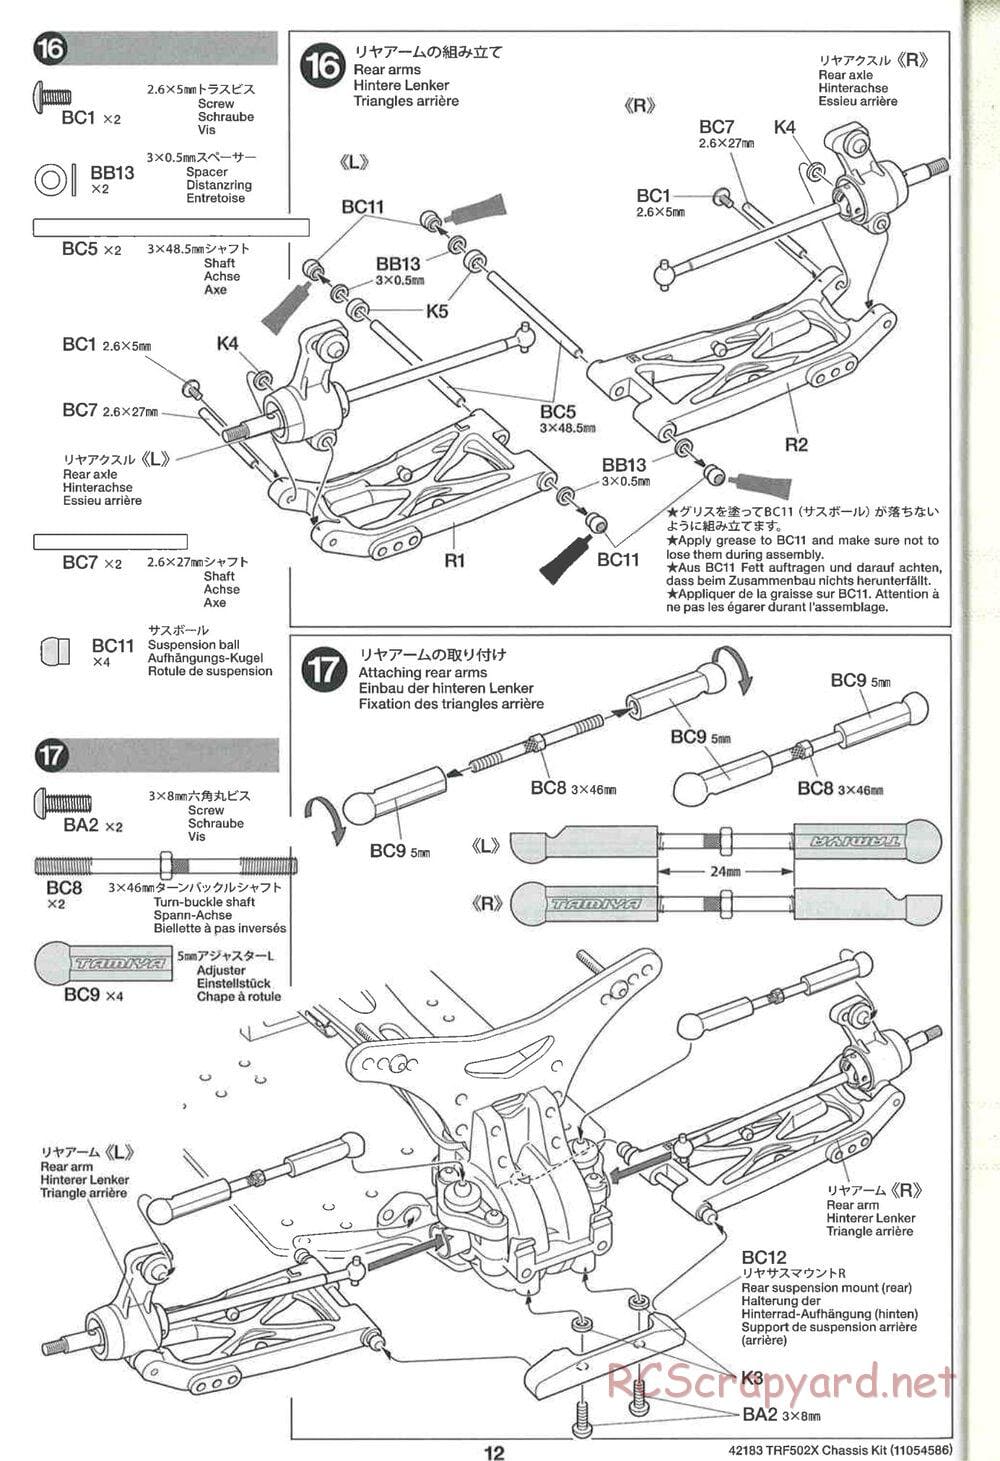 Tamiya - TRF502X Chassis - Manual - Page 12